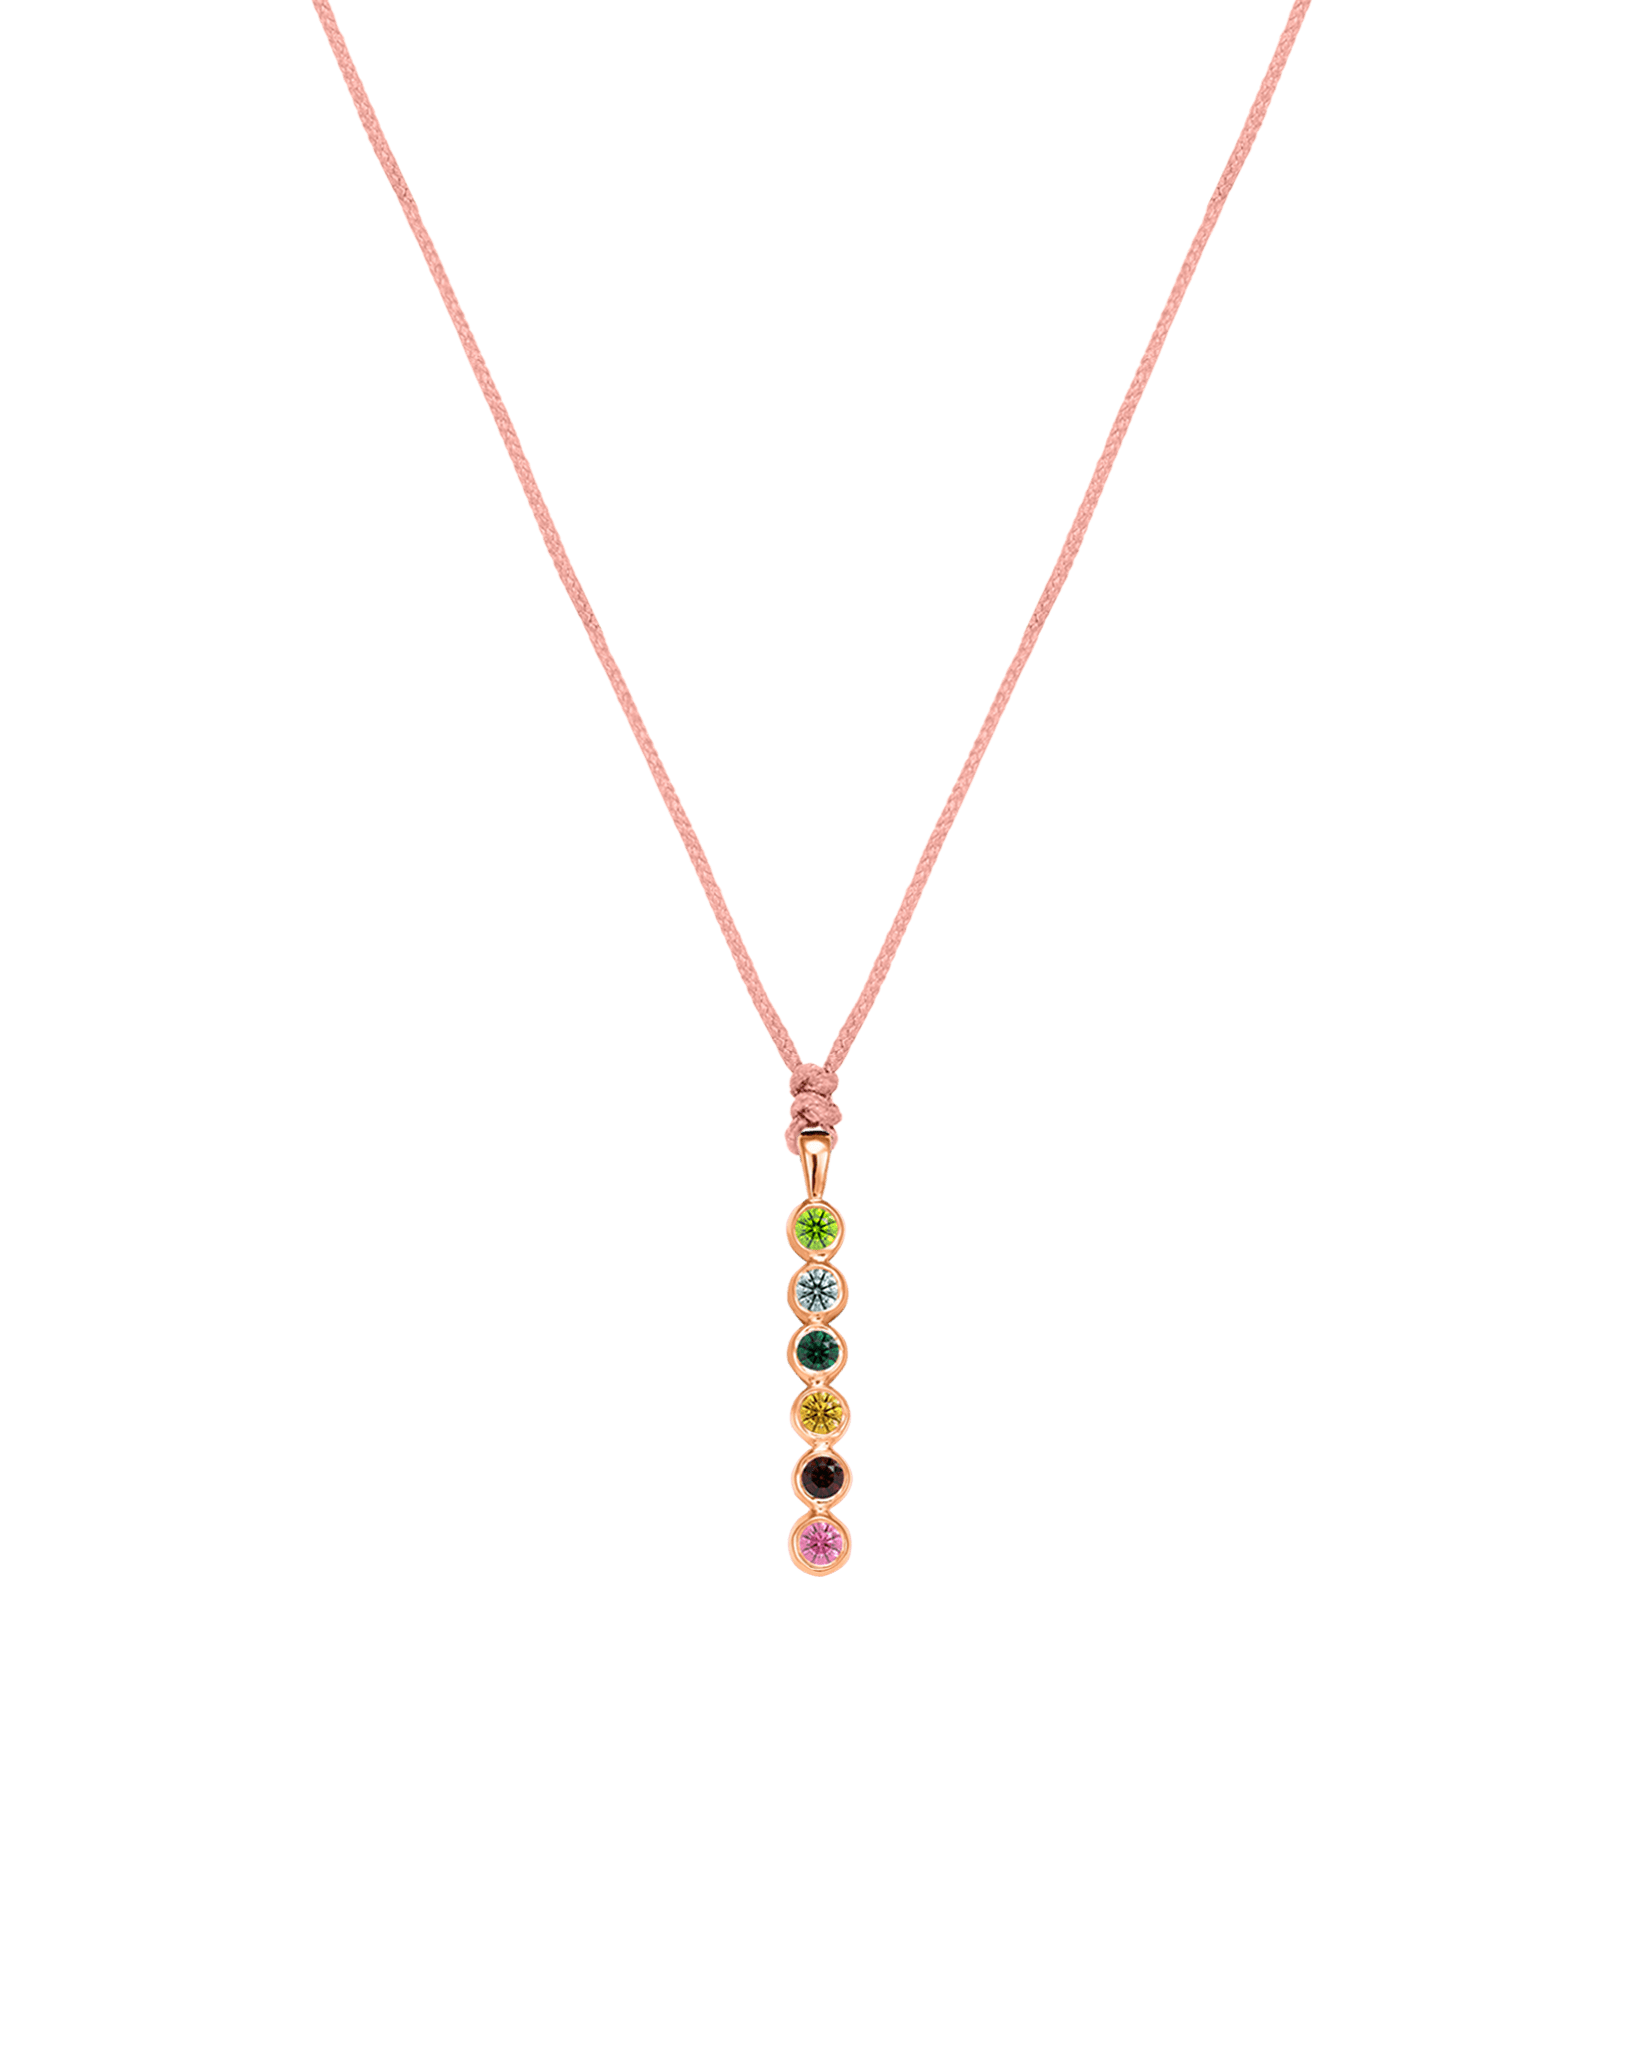 The Birthstones Bar Necklace - 14K Rose Gold Necklaces 14K Solid Gold Pink 2 